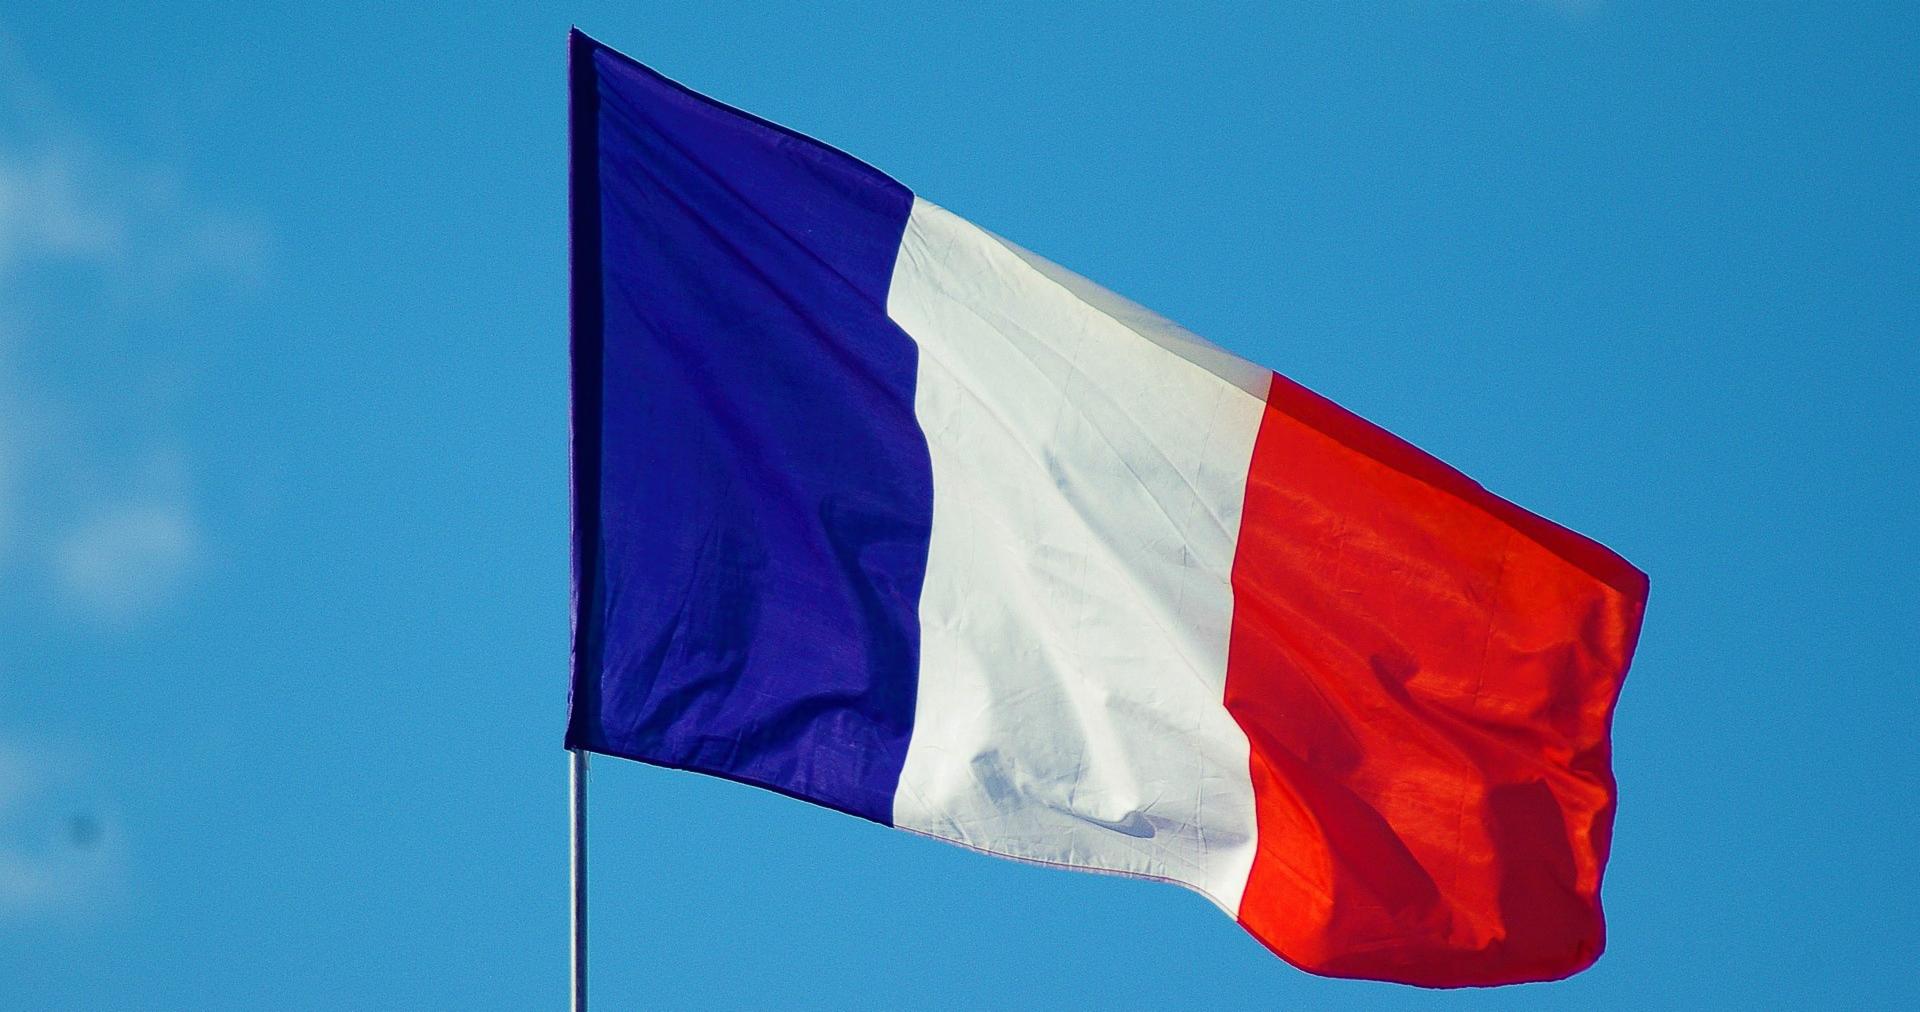 France Digital Tax Approved; U.S. Explores Retaliatory Options